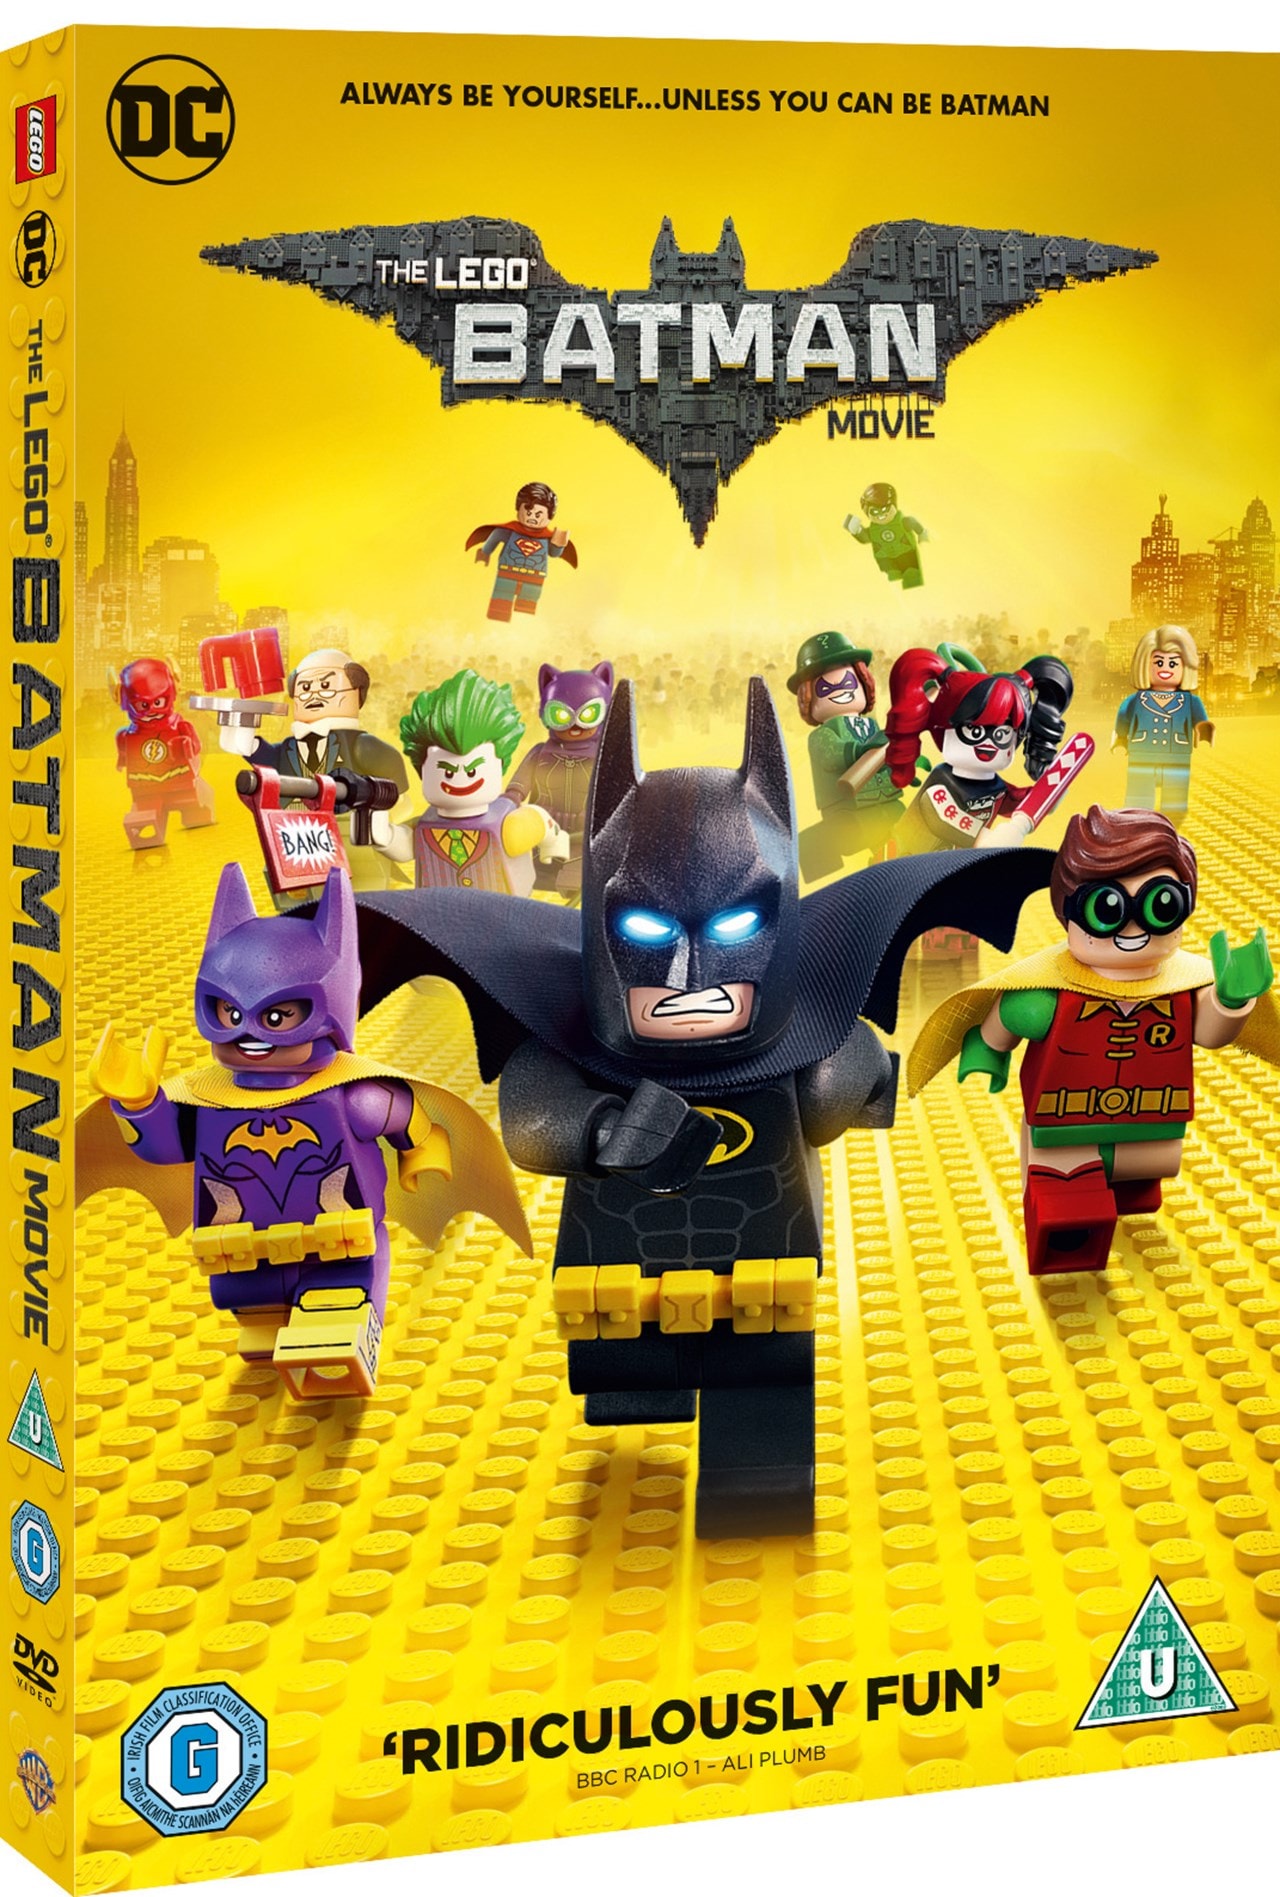 The LEGO Batman Movie | DVD | Free shipping over £20 | HMV ...